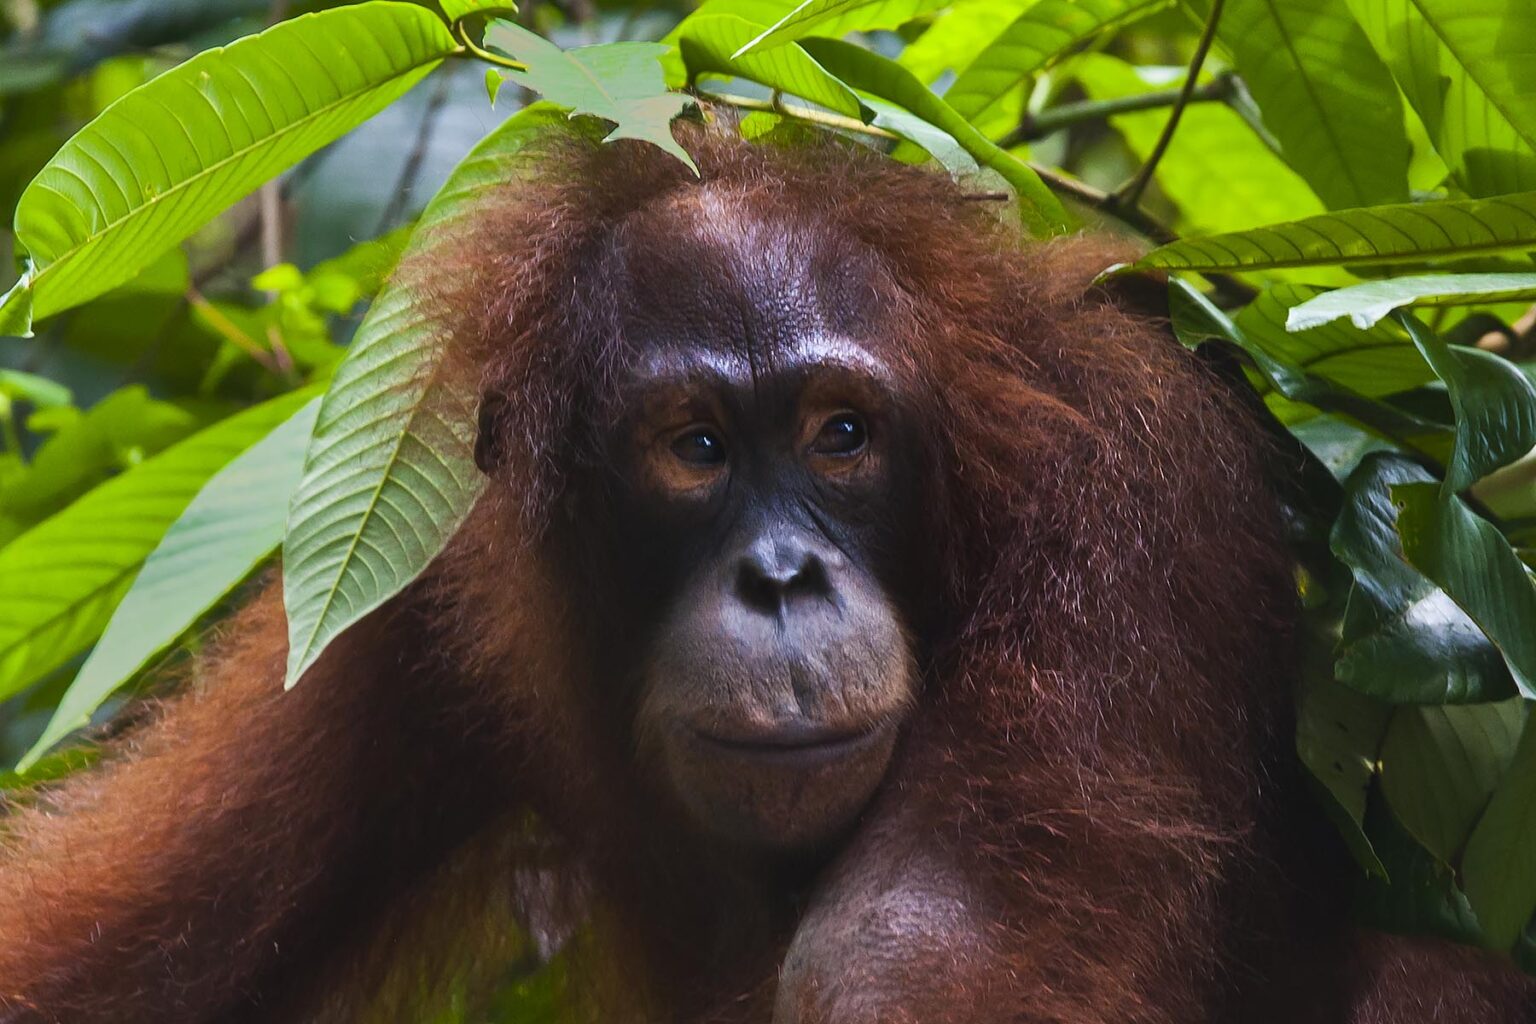 An ORANGUTAN (Pongo pygmaeus) at the Sepilok Orangutan Rehabilitation Center in the Kabili Sepilok Forest near Sandakan - MALAYSIA, BORNEO